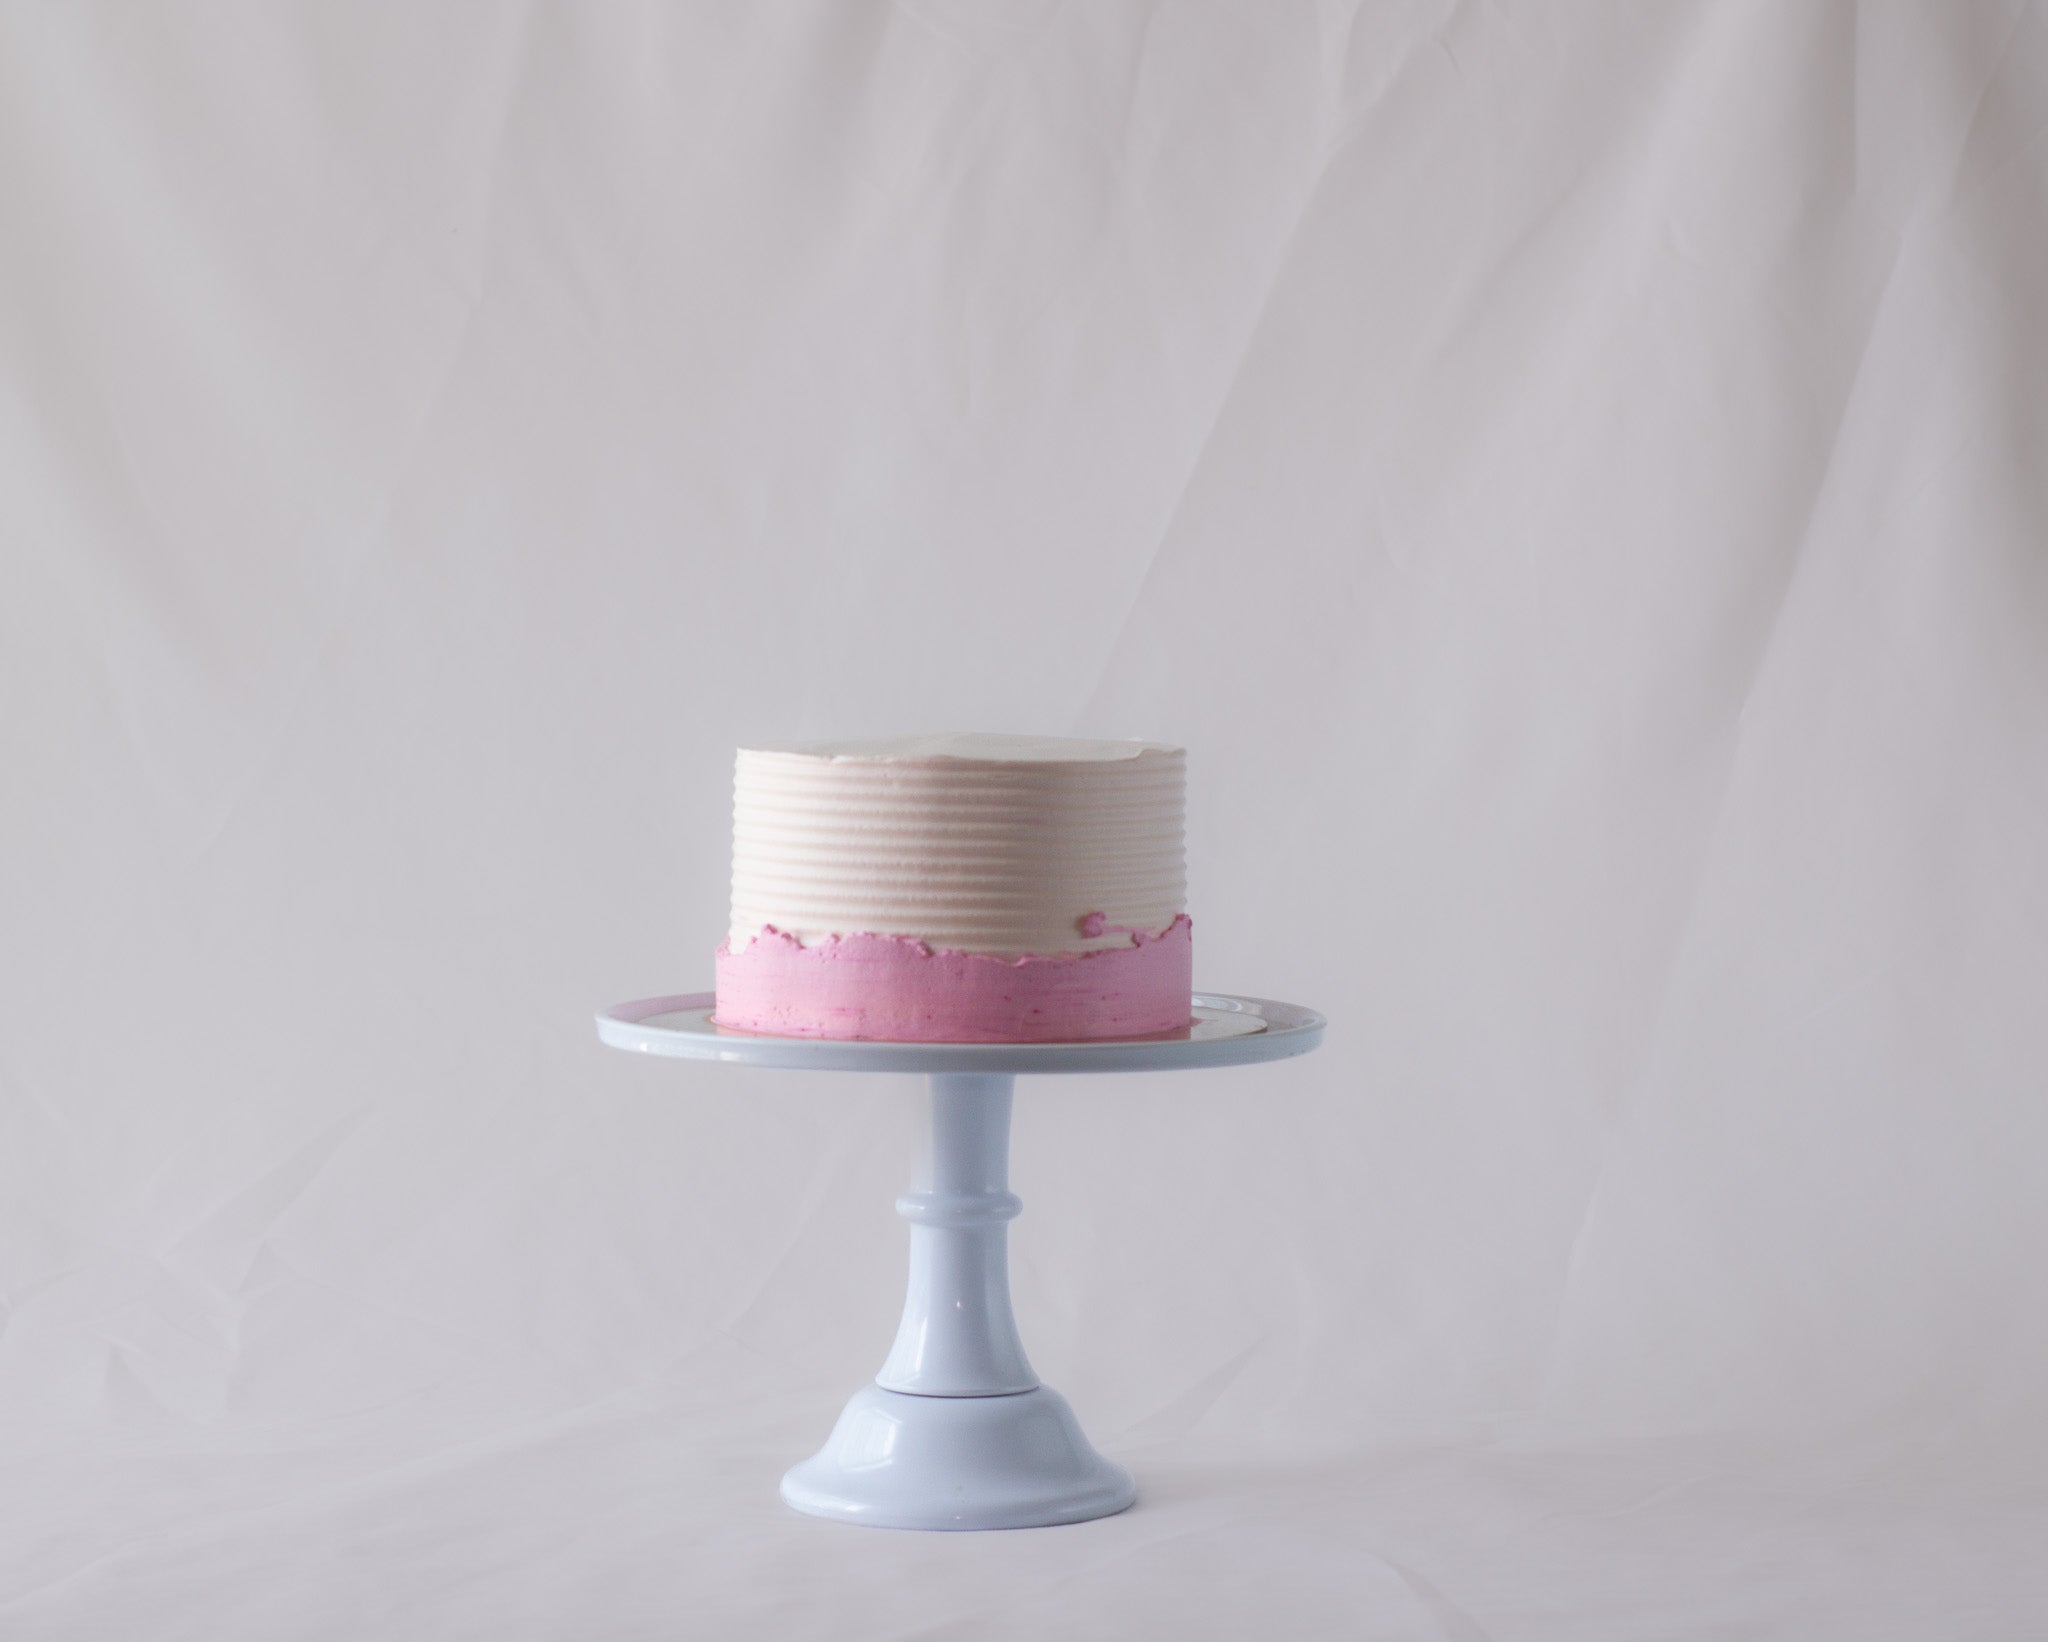 DIY - Decorate-IT-Yourself Cake